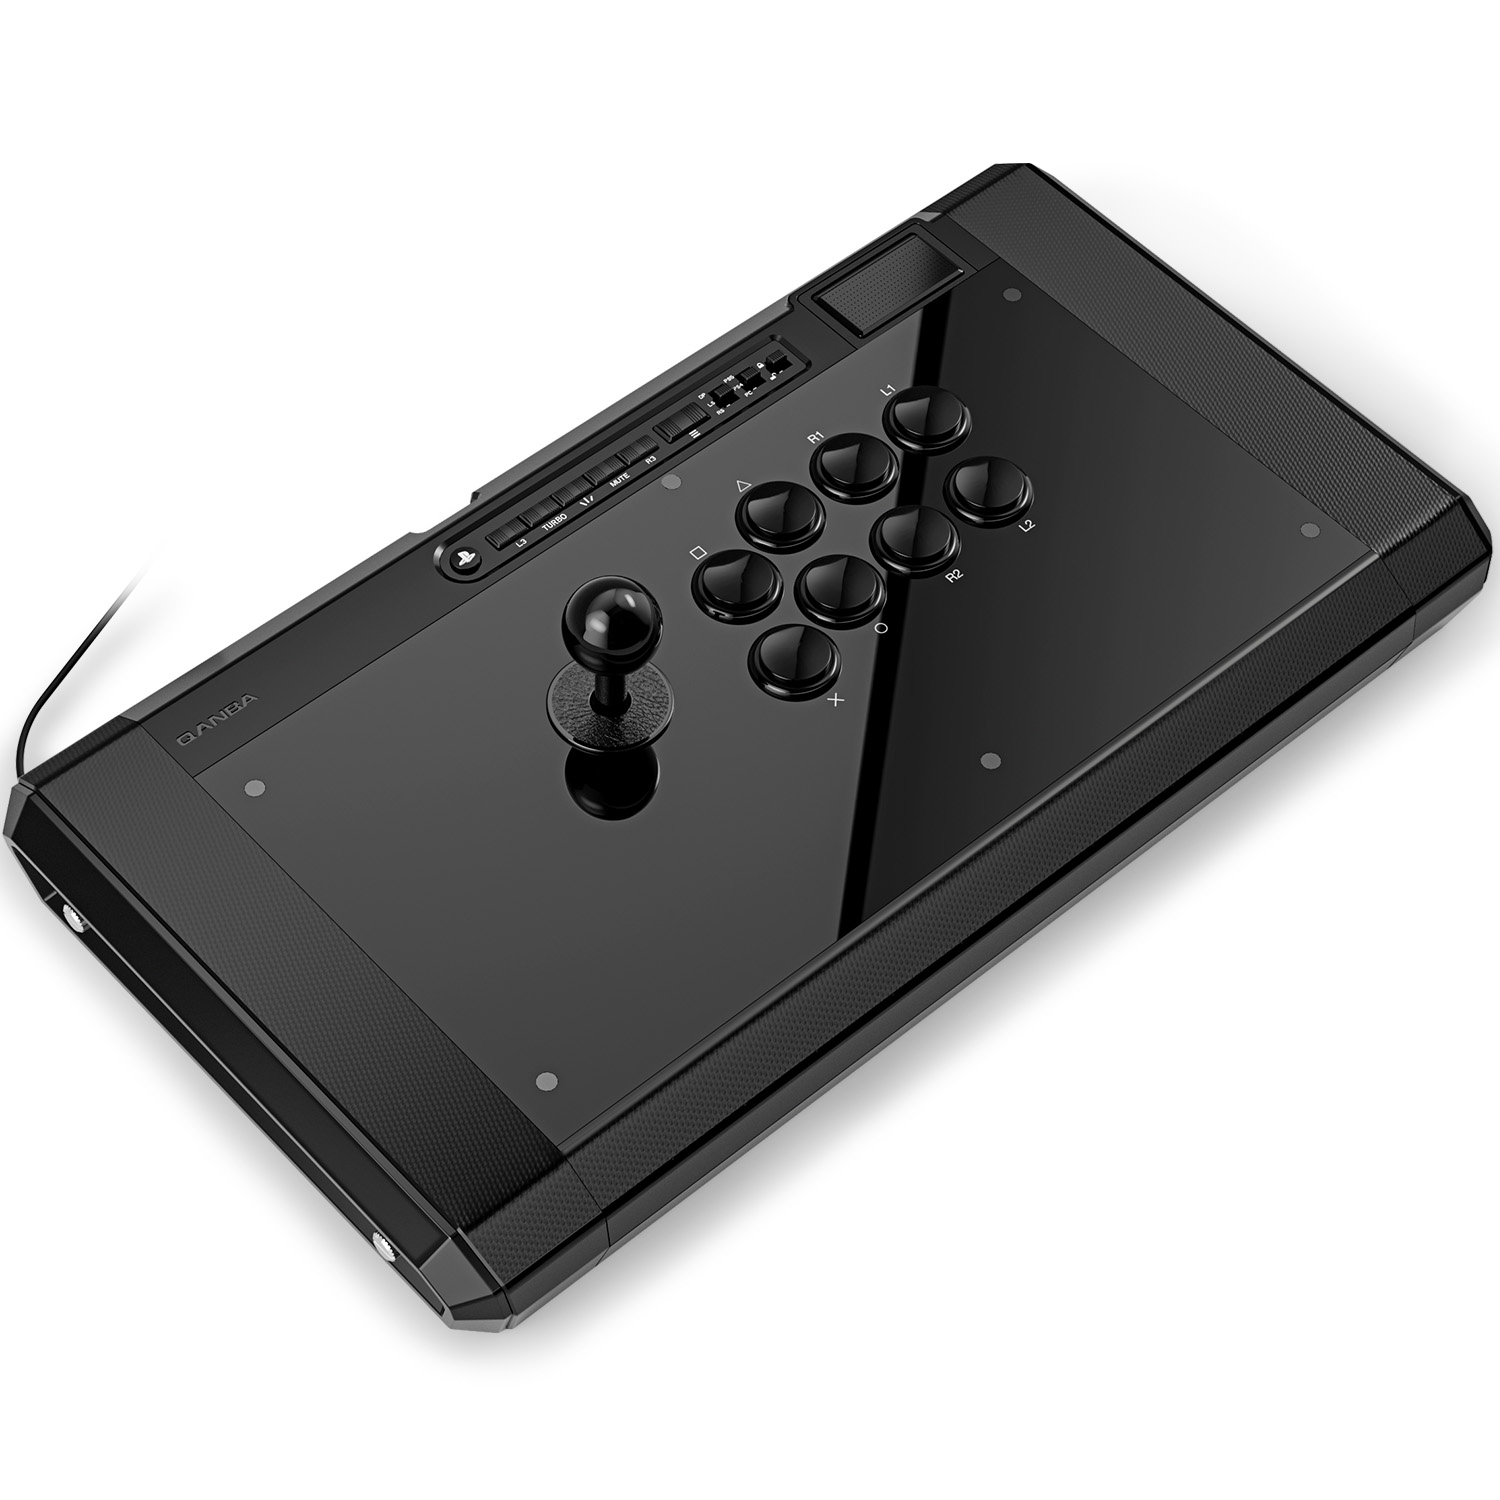 Obsidian 2 Arcade Stick PS4/5/PC